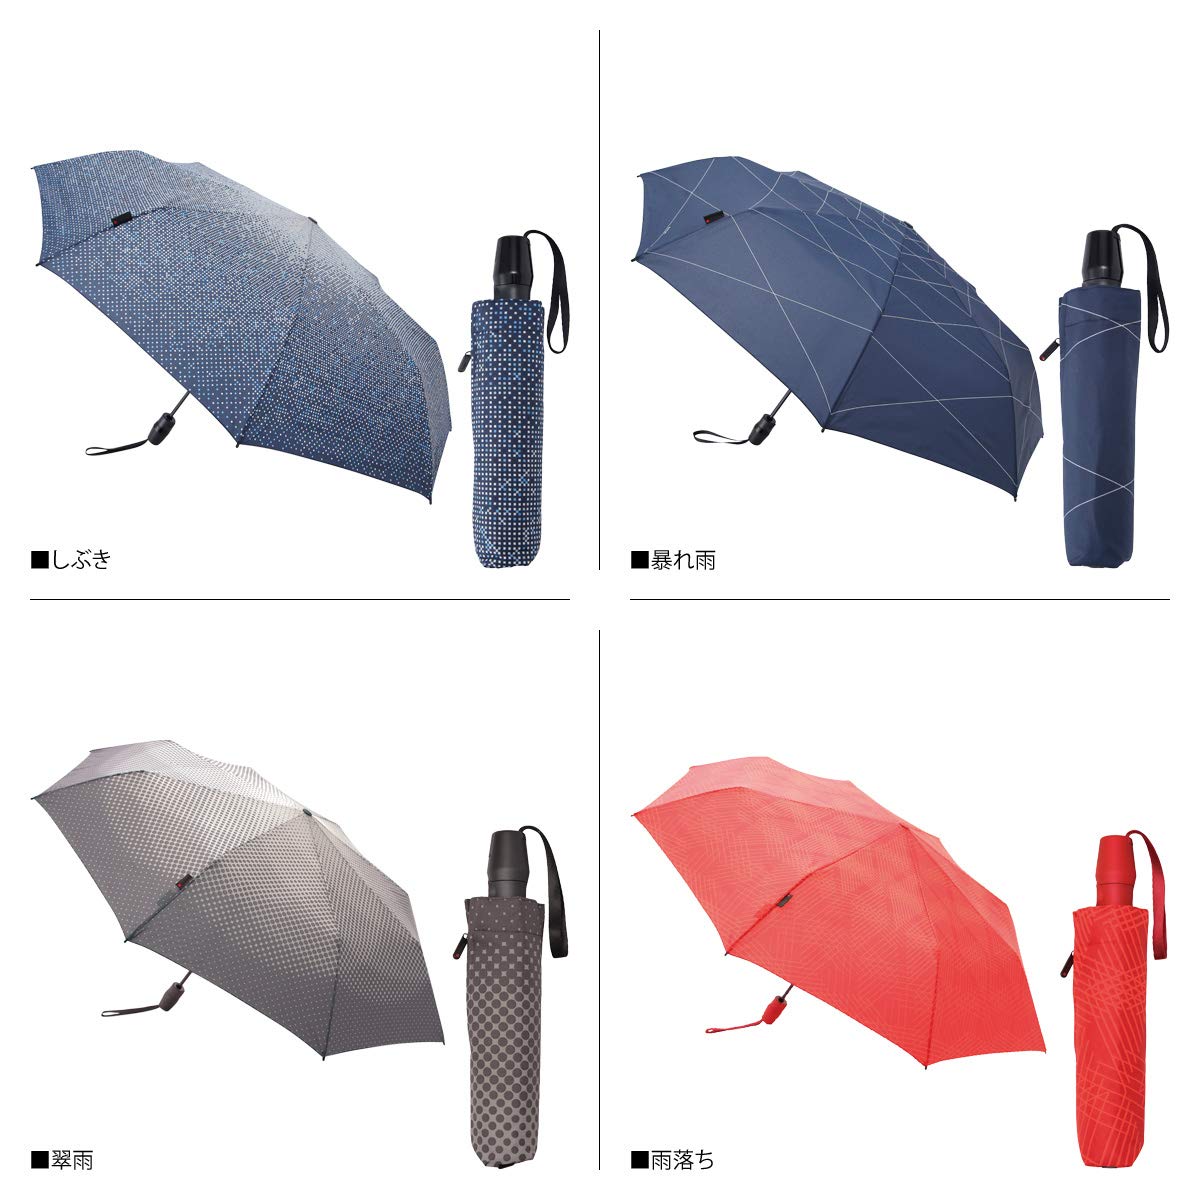 Knirpskni Lupus T.220 folding umbrella folding umbrella light weight compact KNTL220. fog 